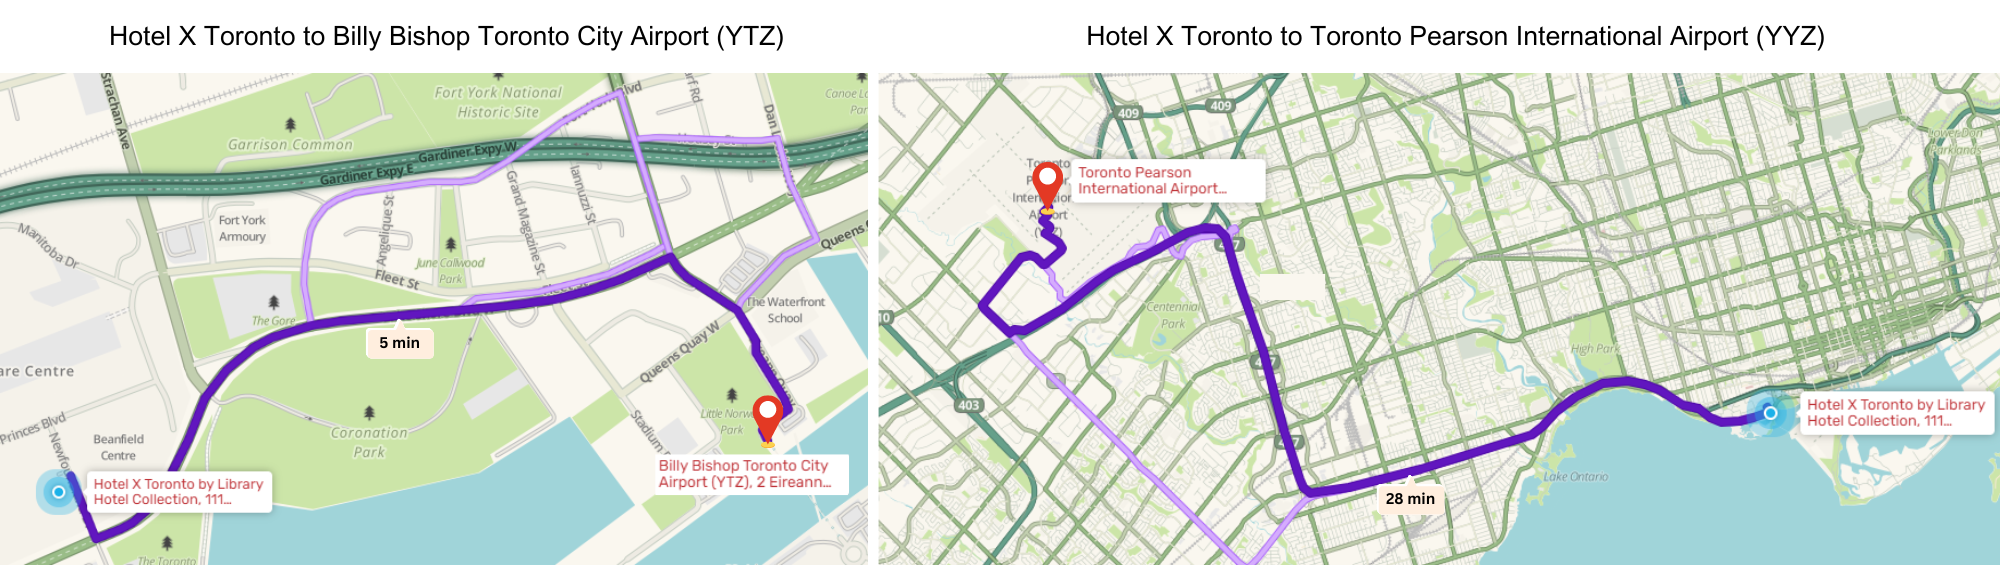 Hotel X Toronto to Billy Bishop and Toronto Pearson International Airport